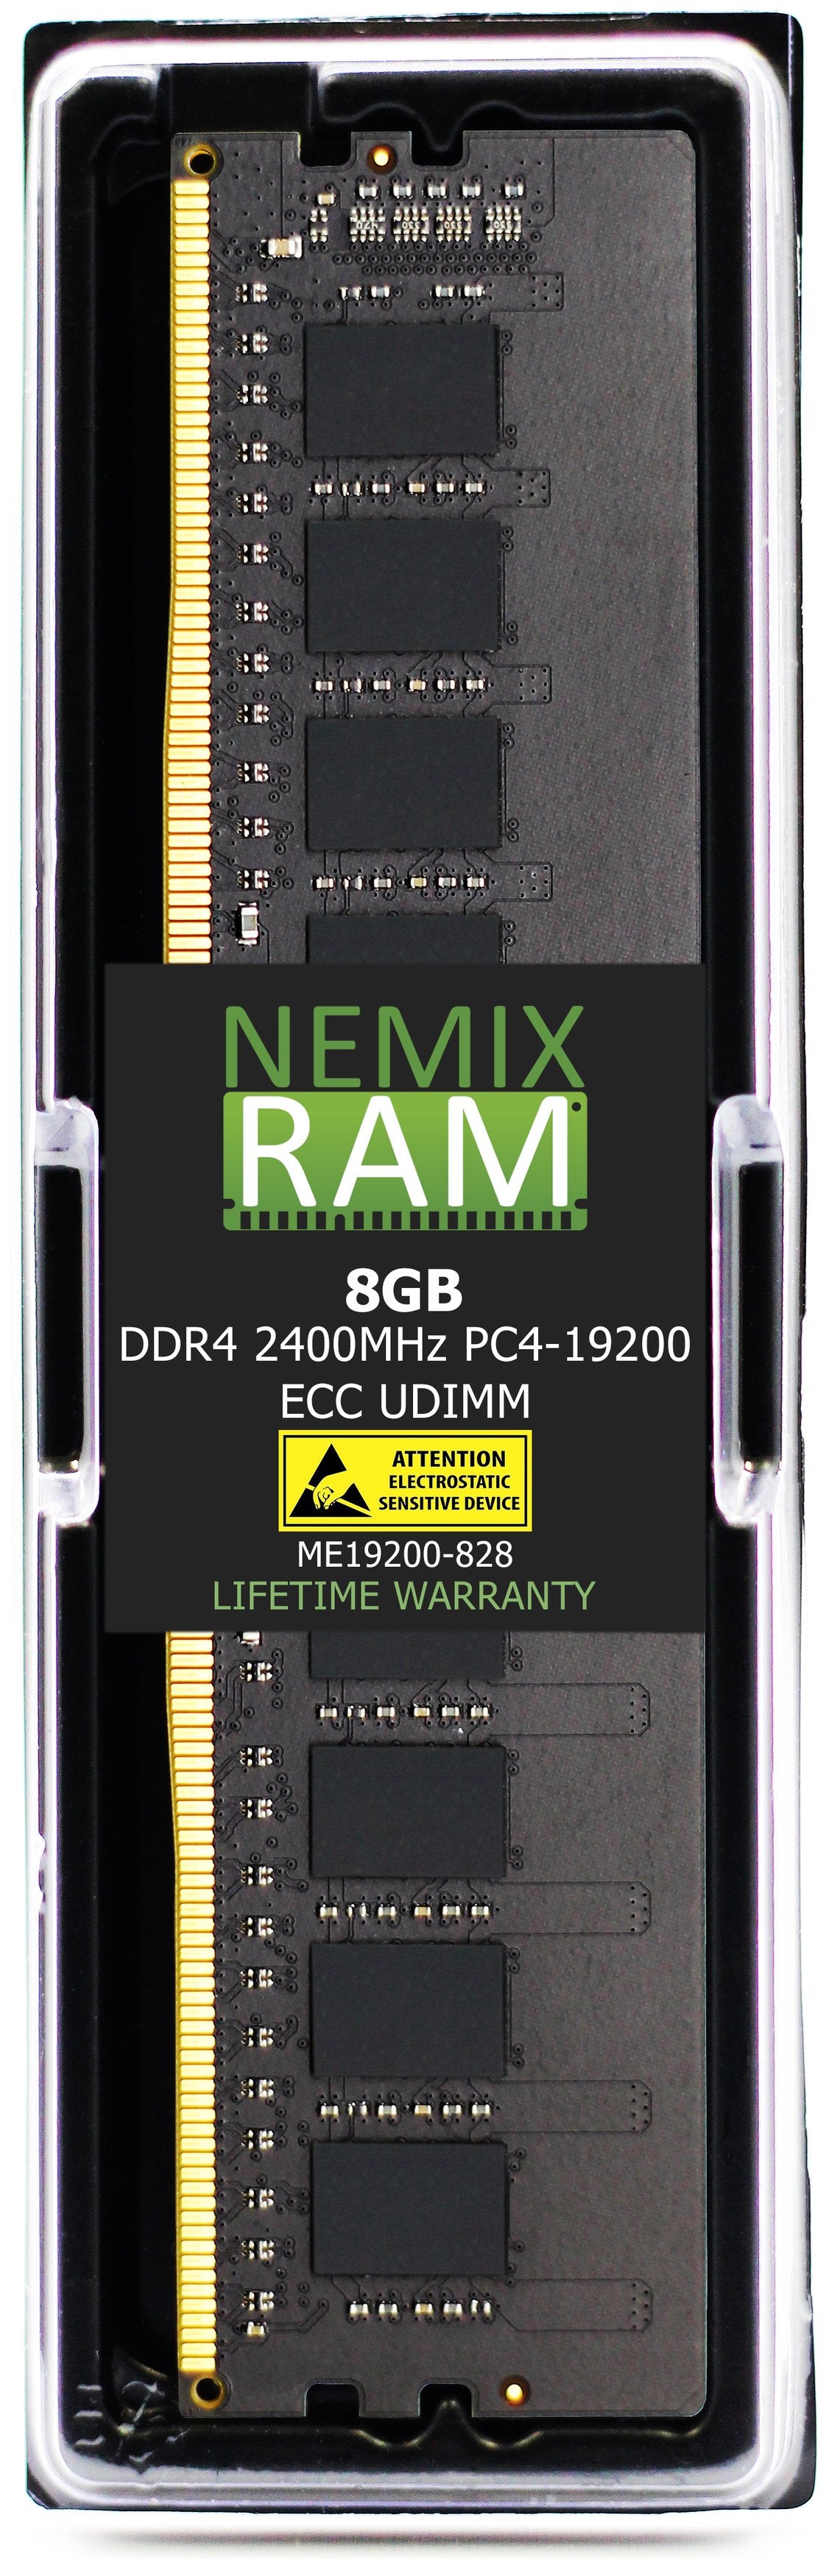 8GB DDR4 2400MHZ PC4-19200 ECC UDIMM Compatible with Supermicro MEM-DR480L-SL01-EU24